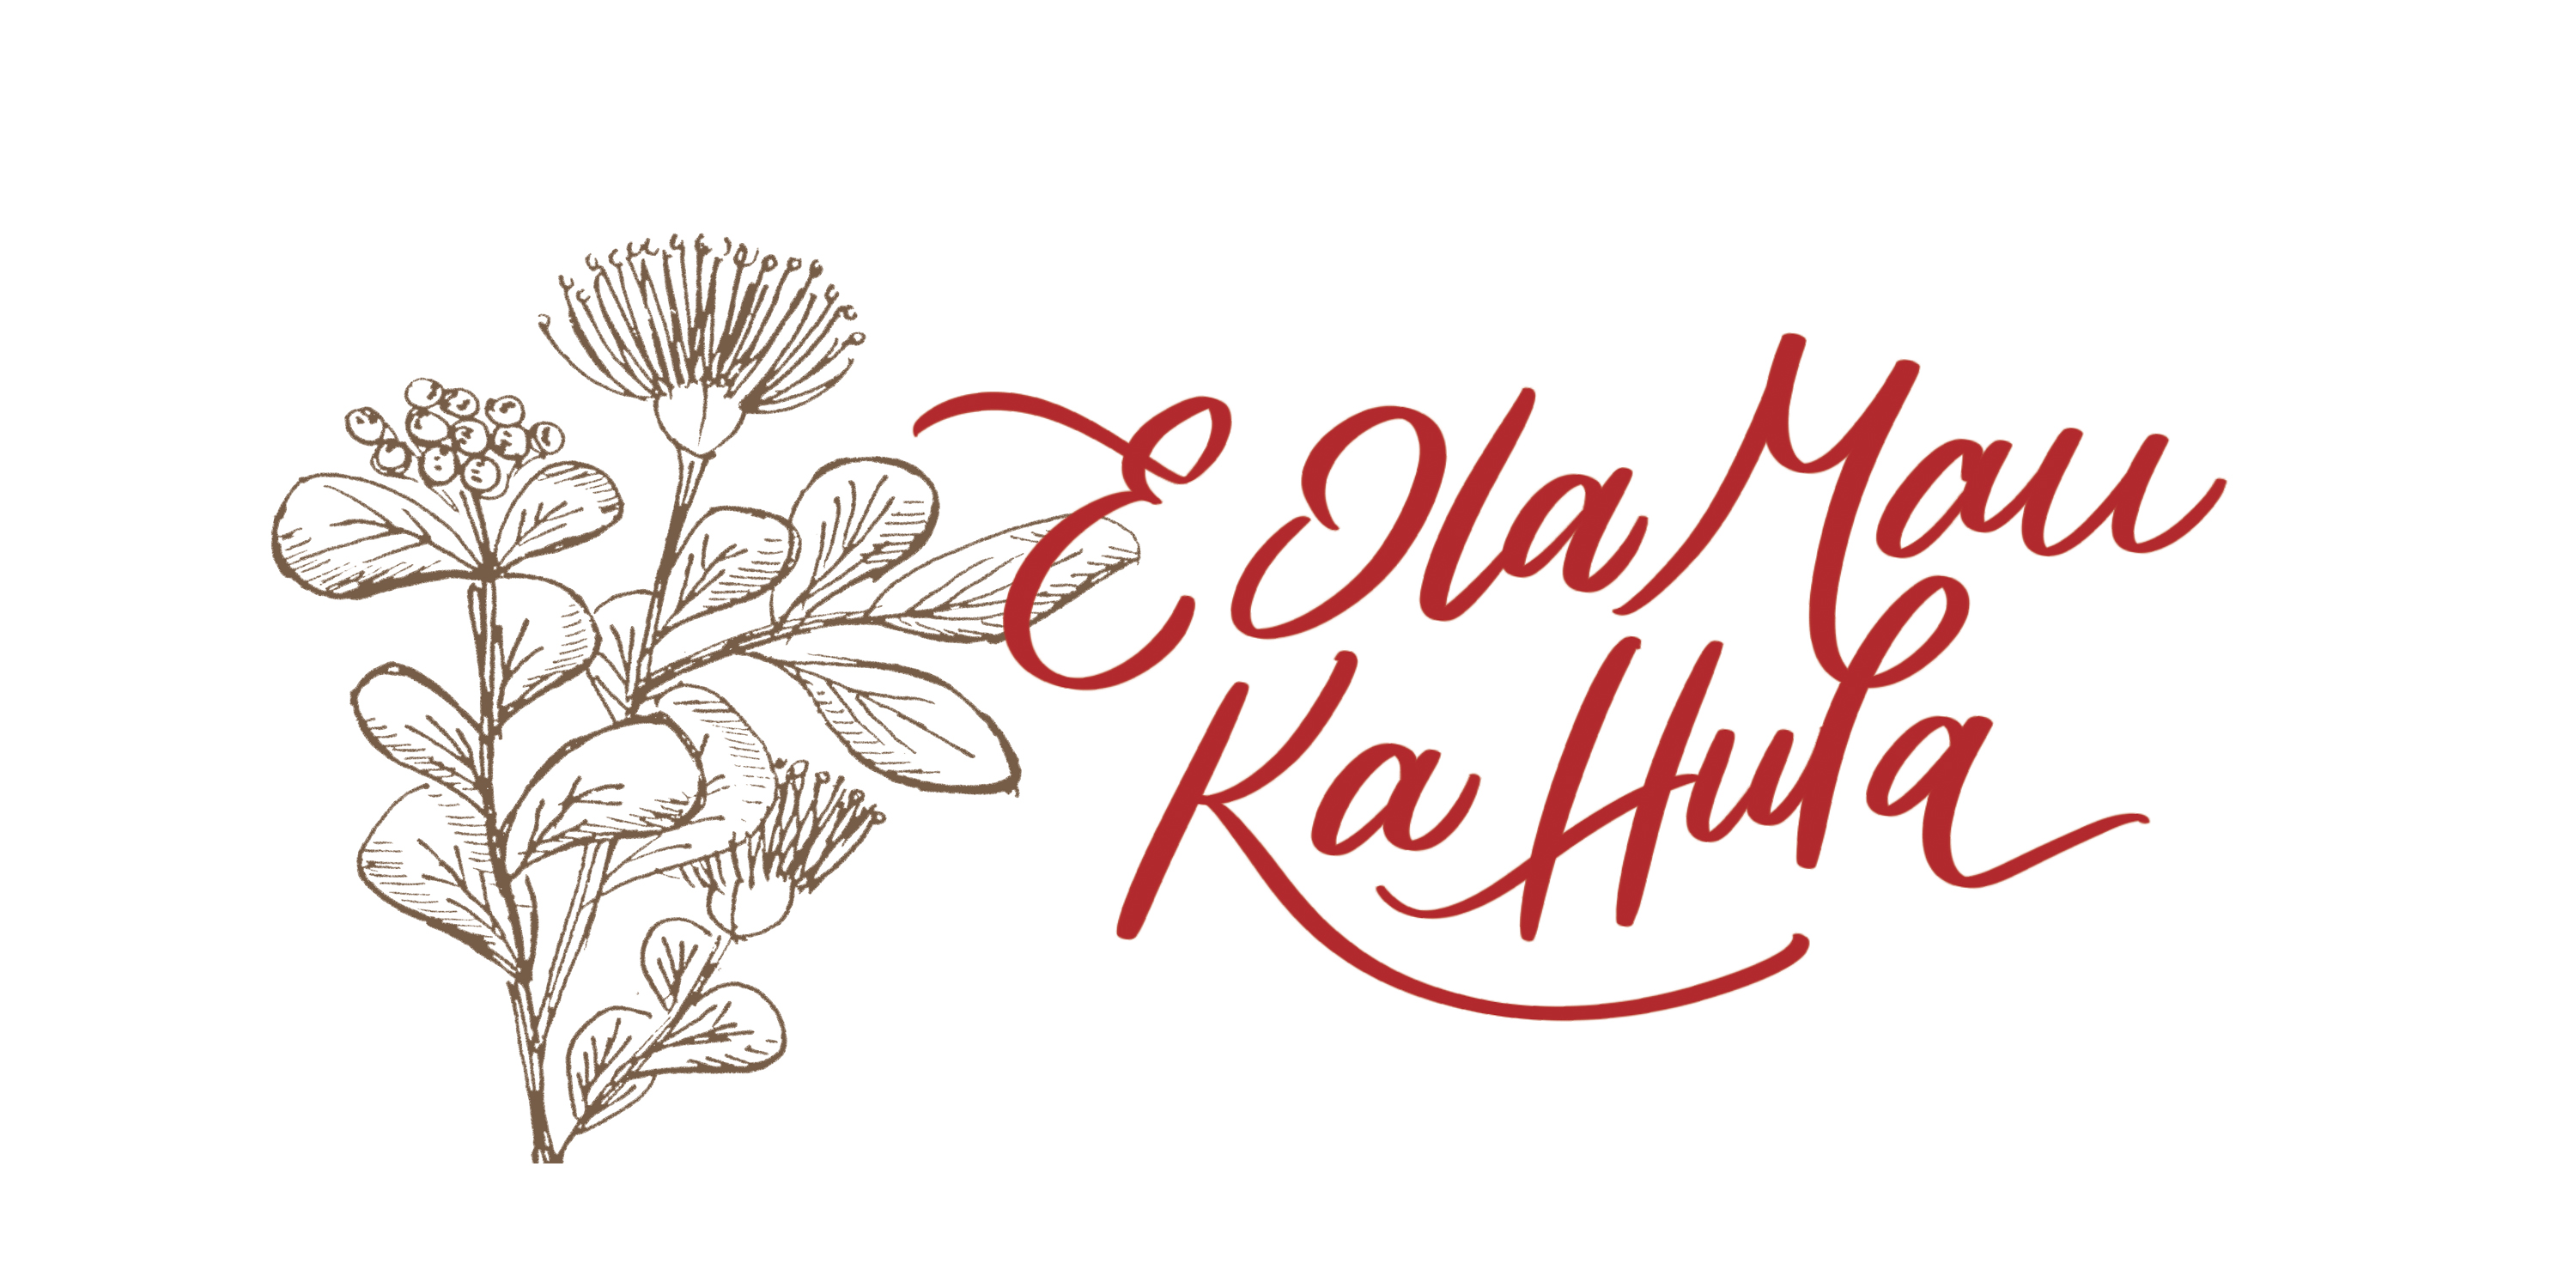 E Ola Maui Ka Hula Banner Image